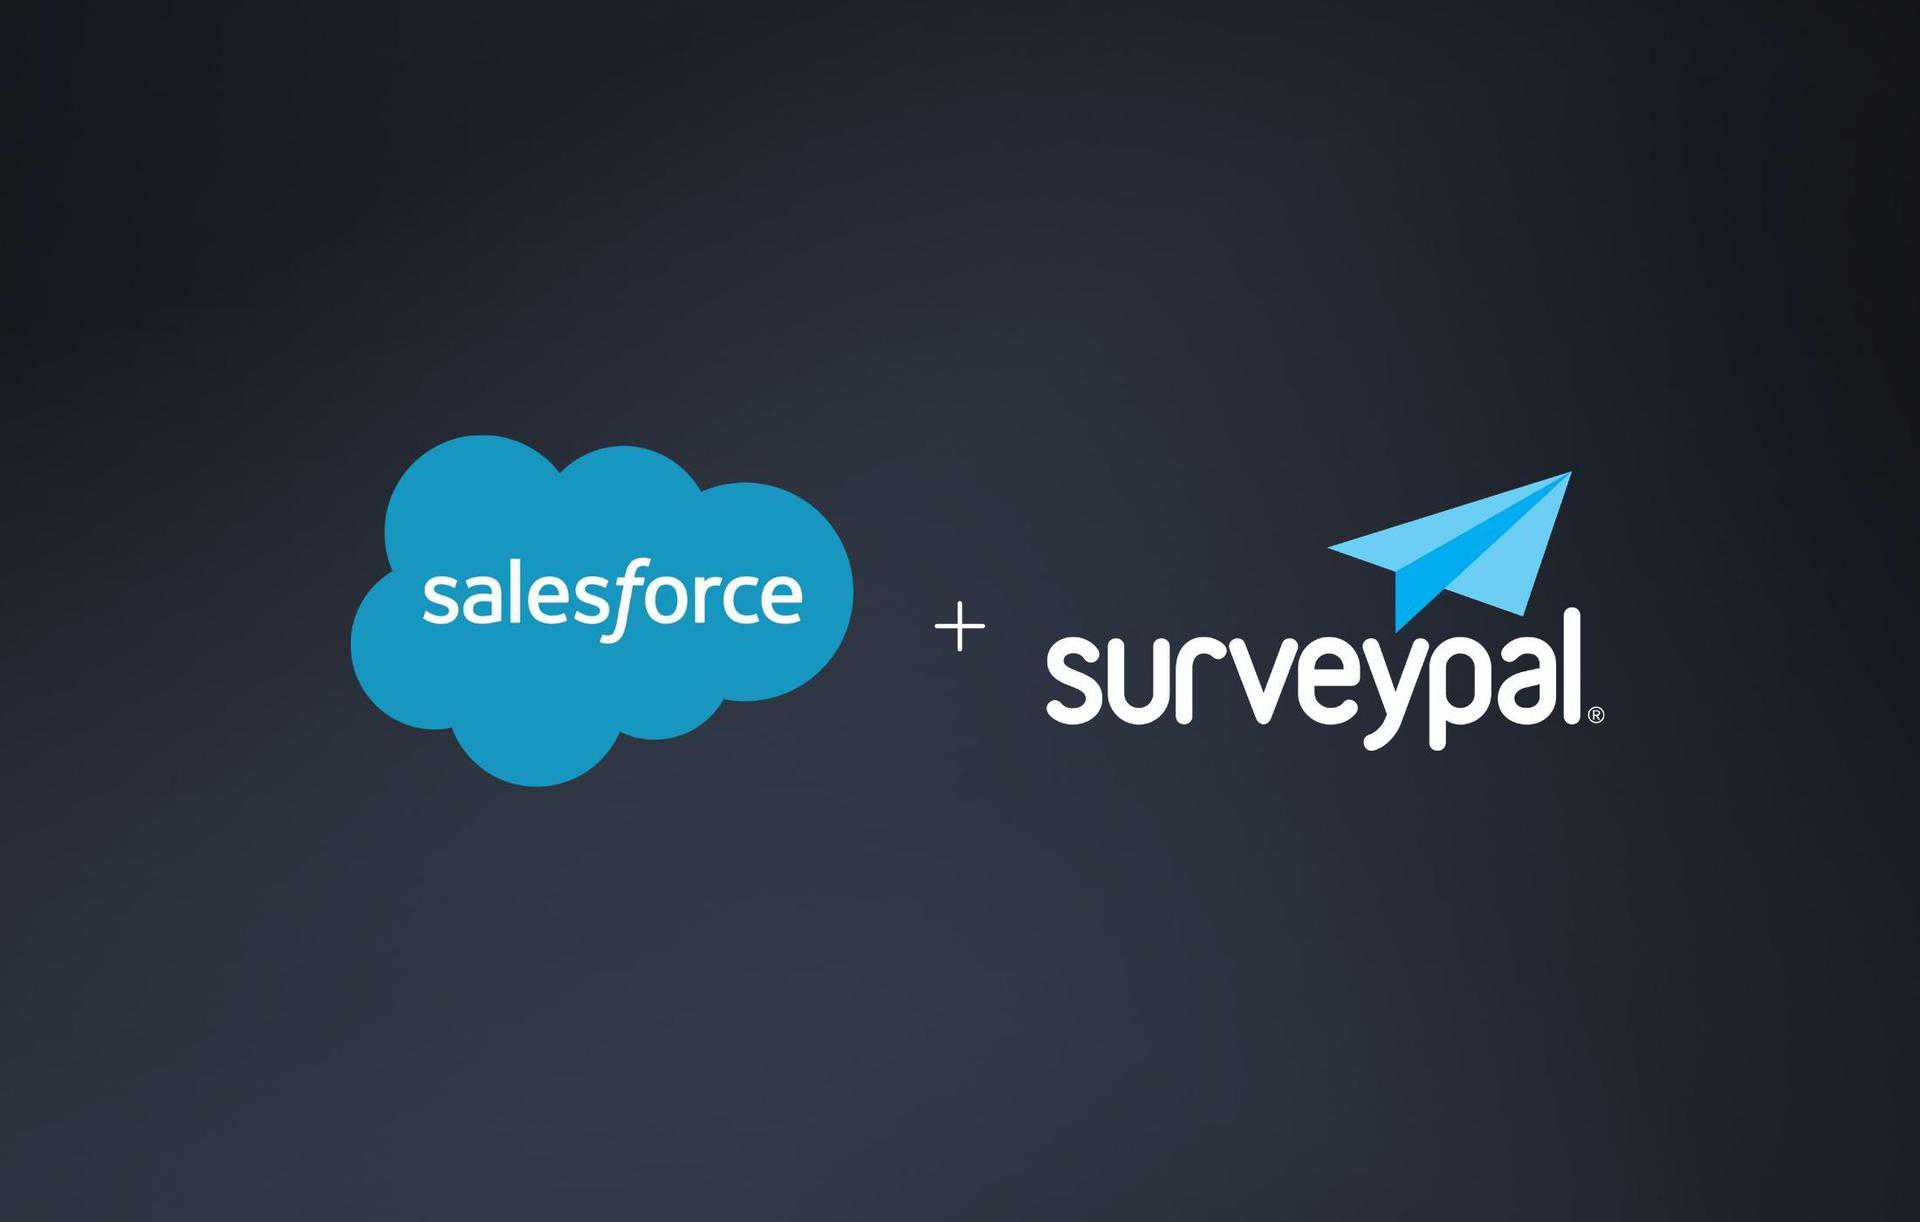 Salesforce logo next to Surveypal logo on a dark background